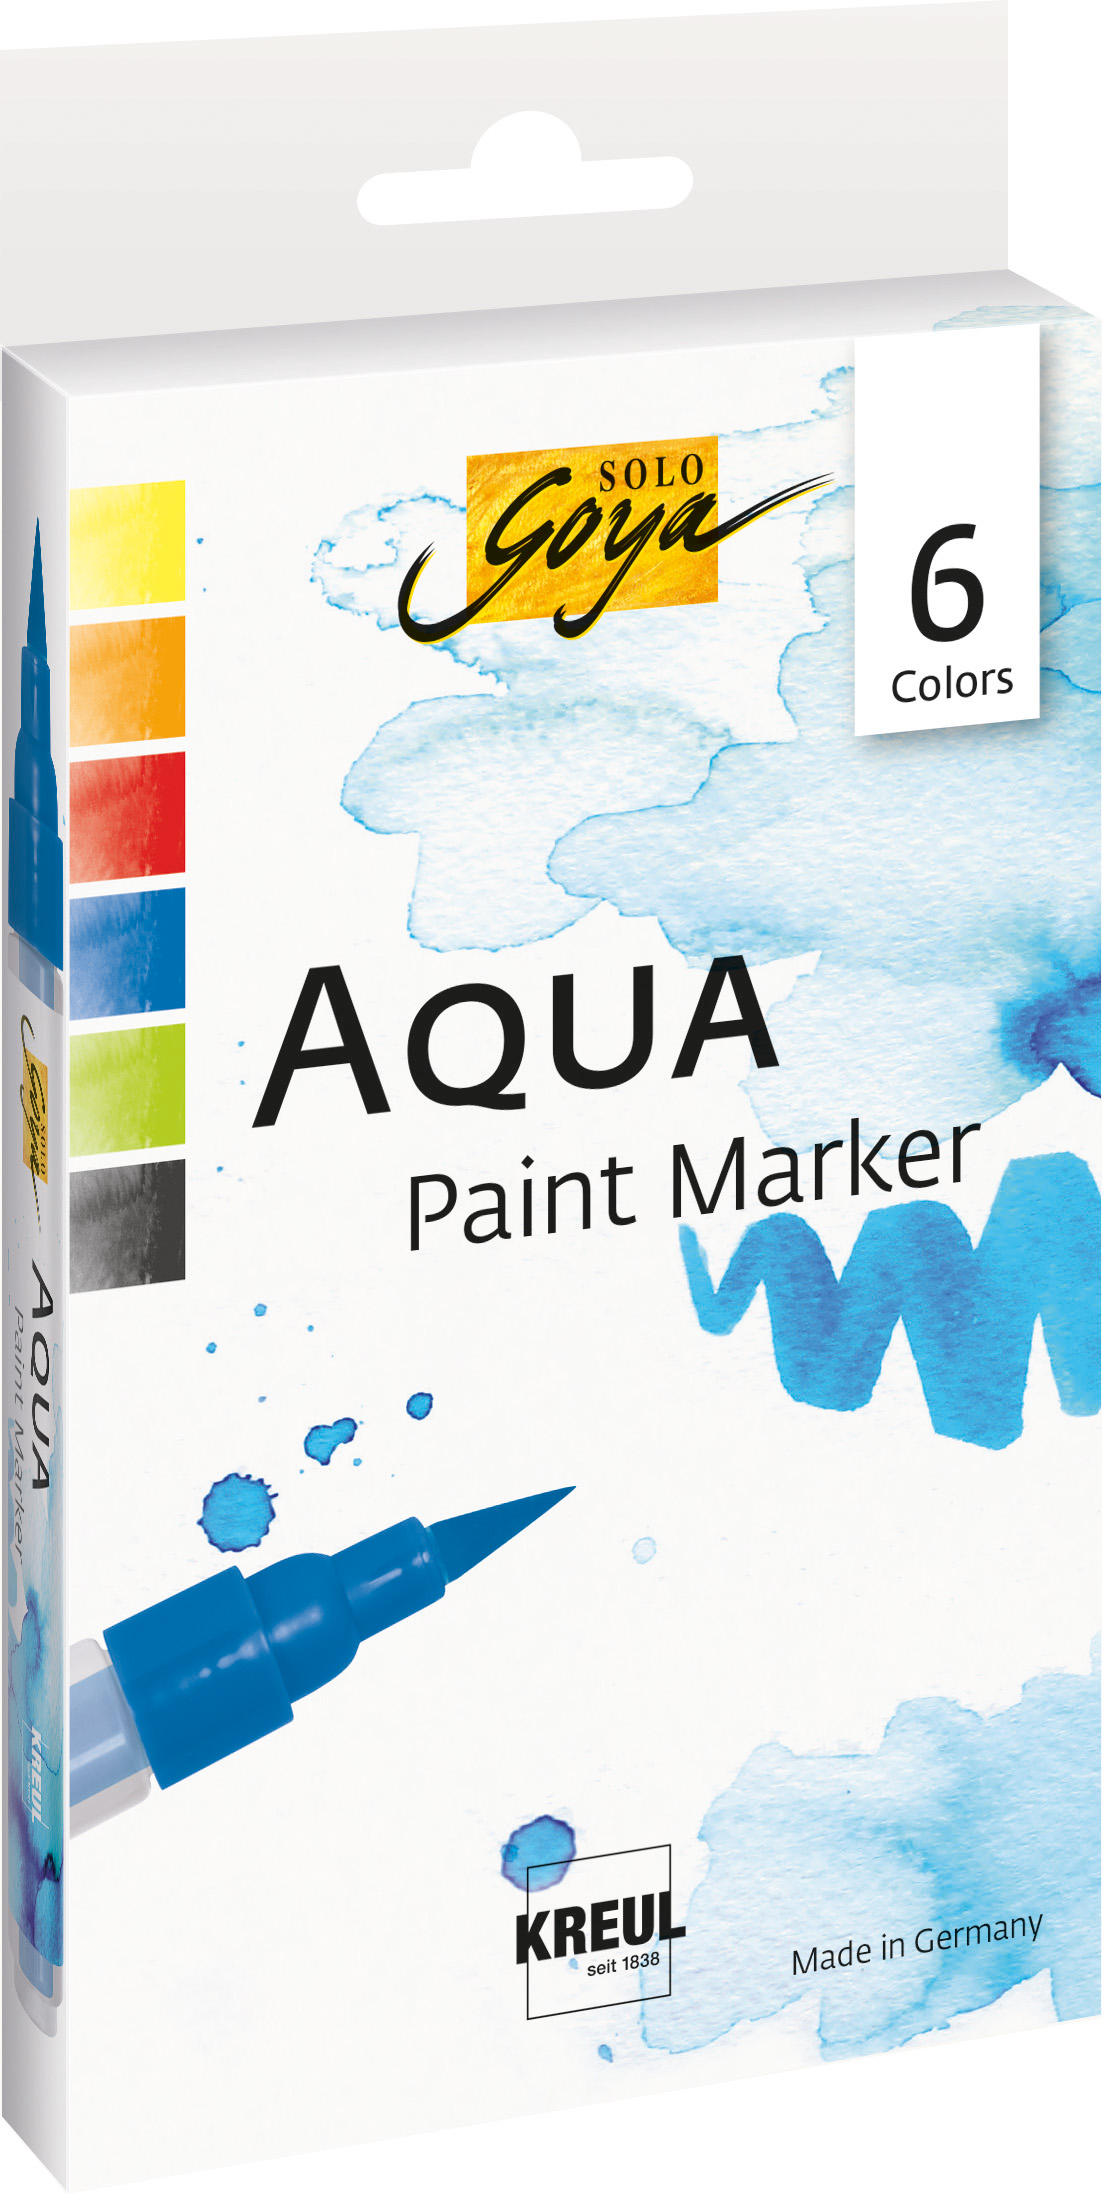 KREUL Solo goya aqua paint penna set á 6pz prezzo netto